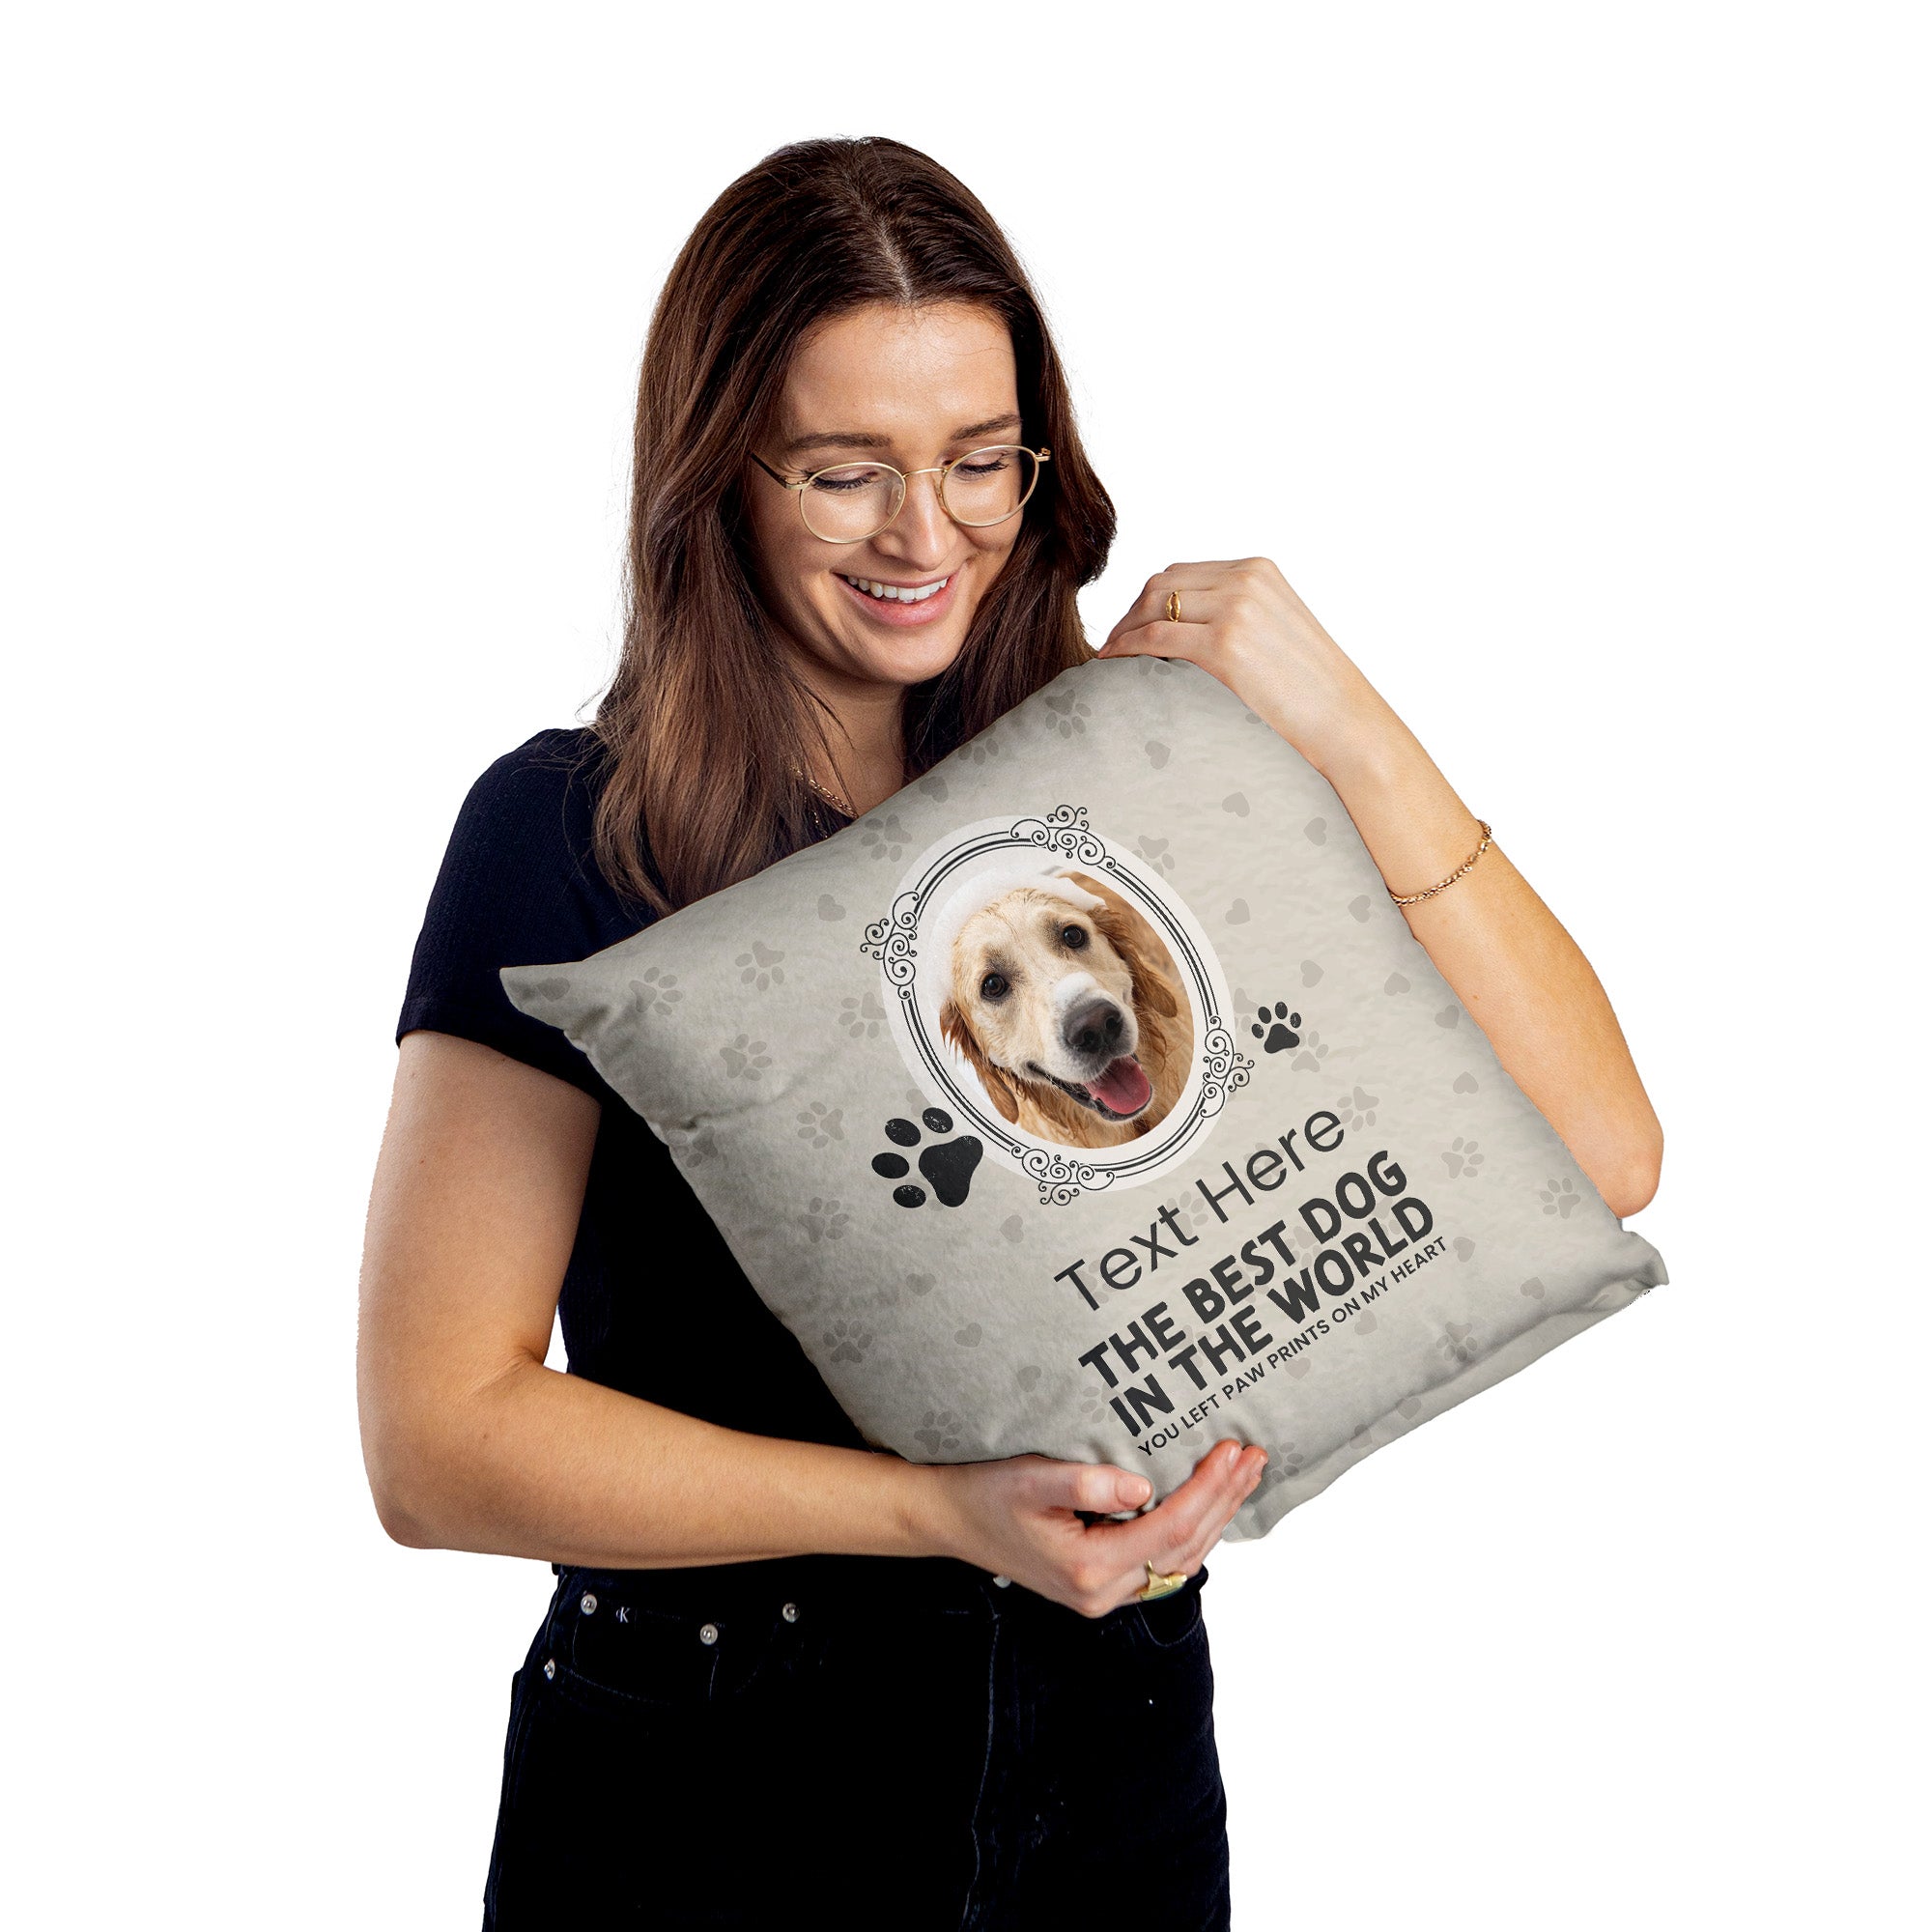 Best Dog - Memory - Personalised Memory Cushion - Two Sizes